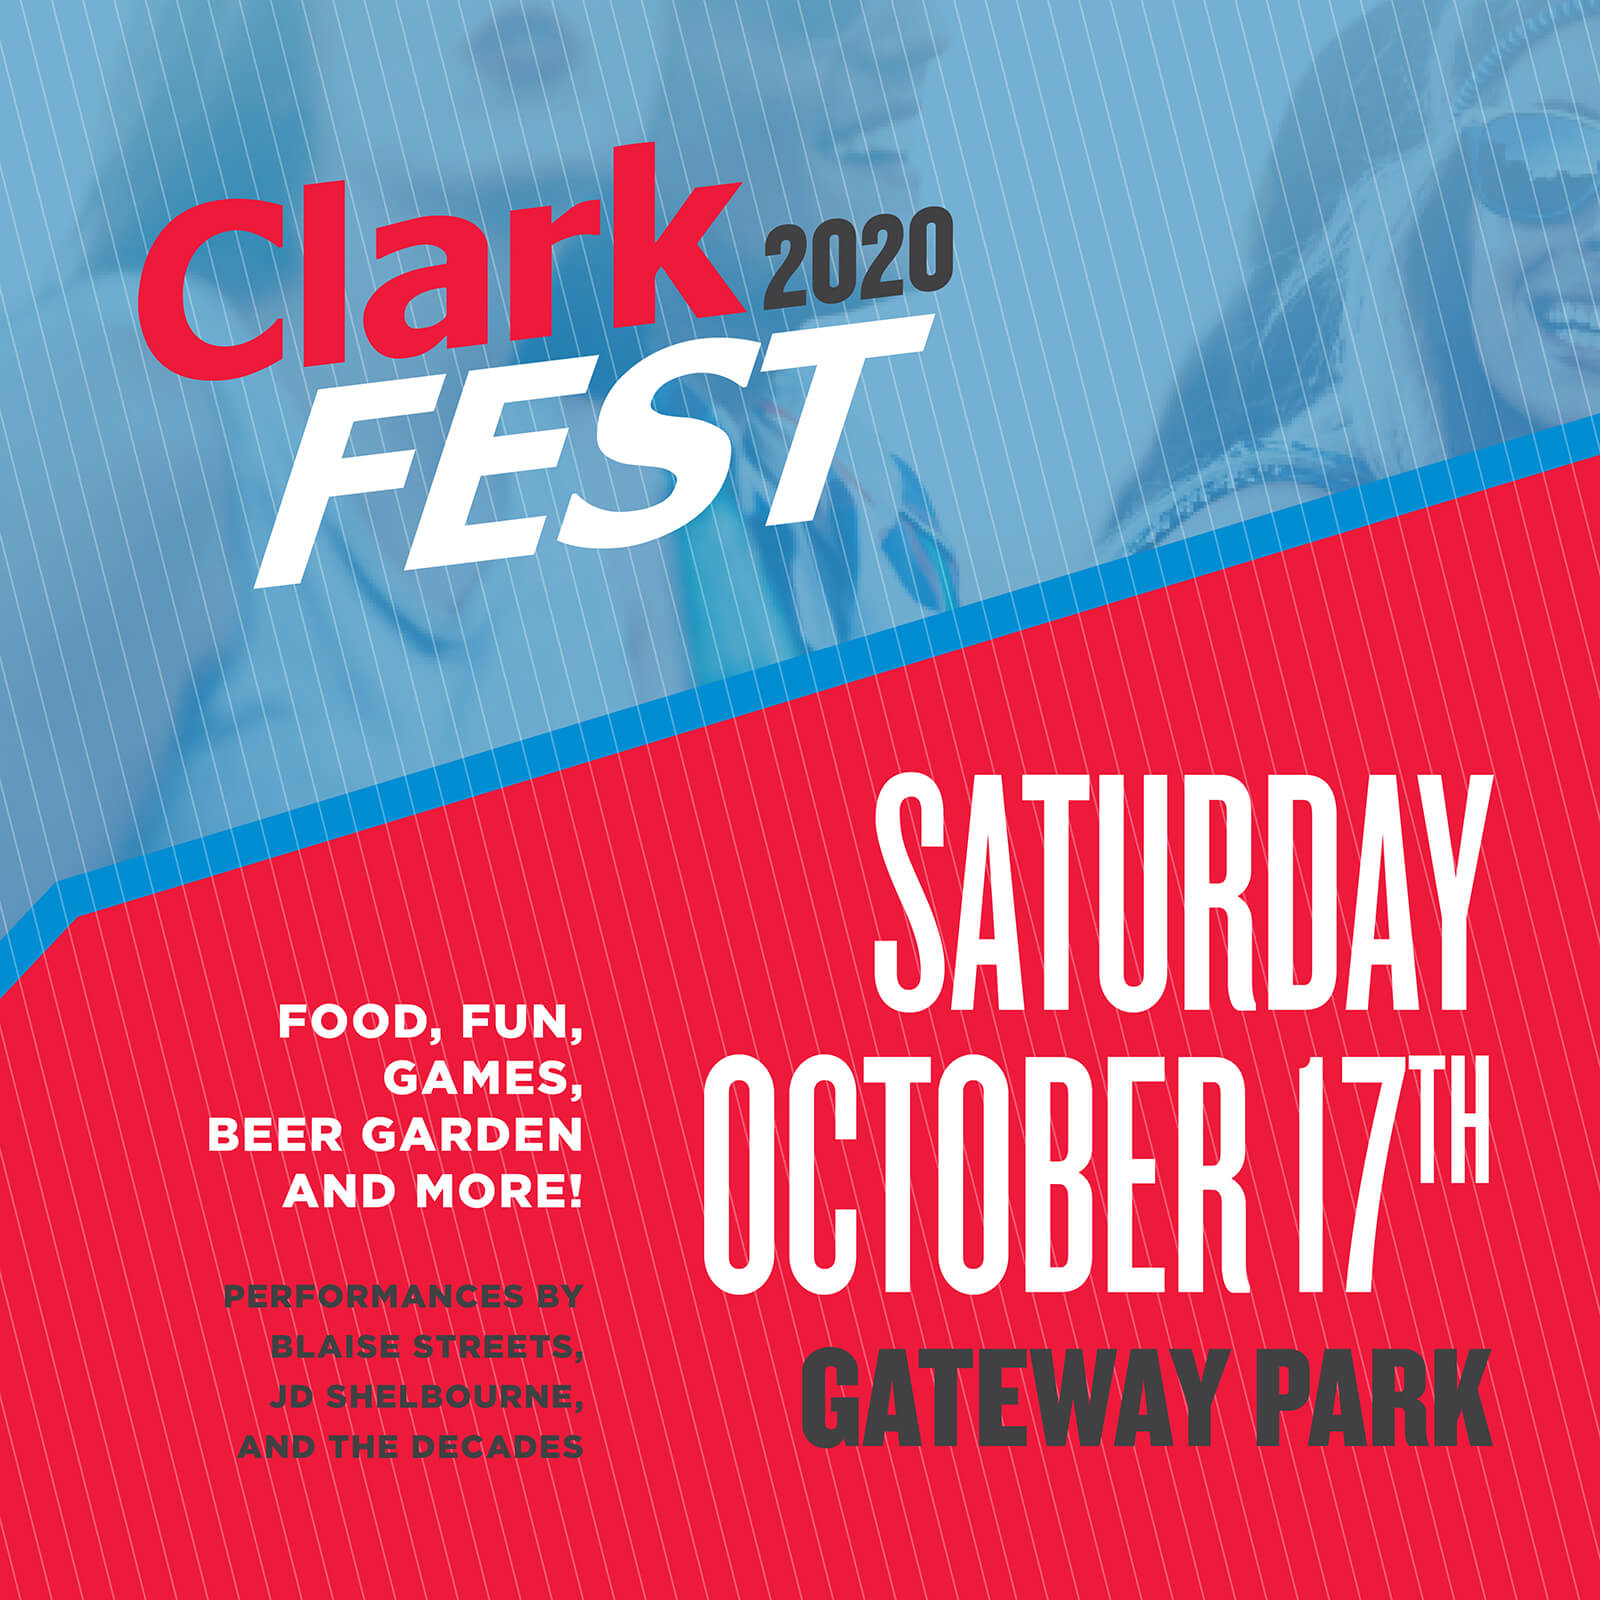 Clarkfest 2020